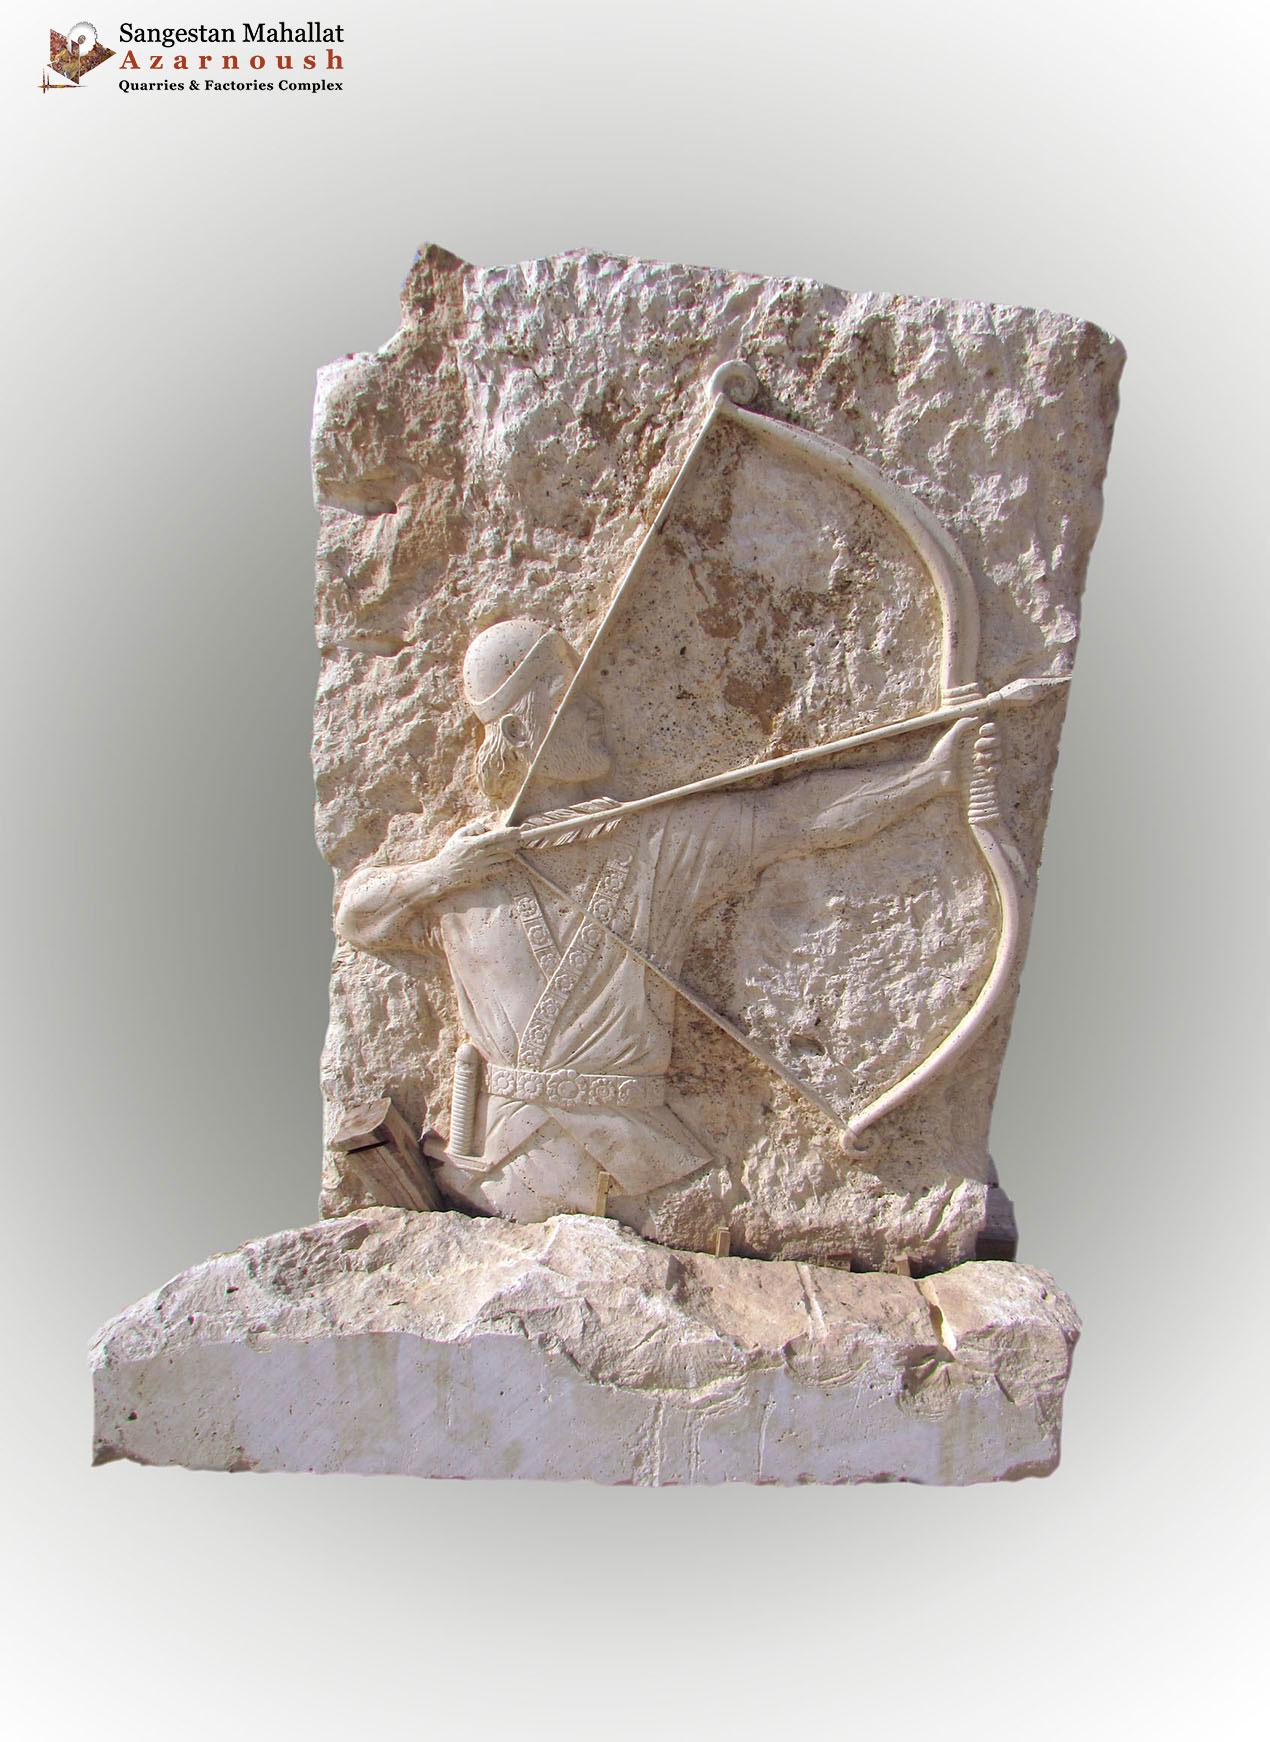 Sculpture of Arash